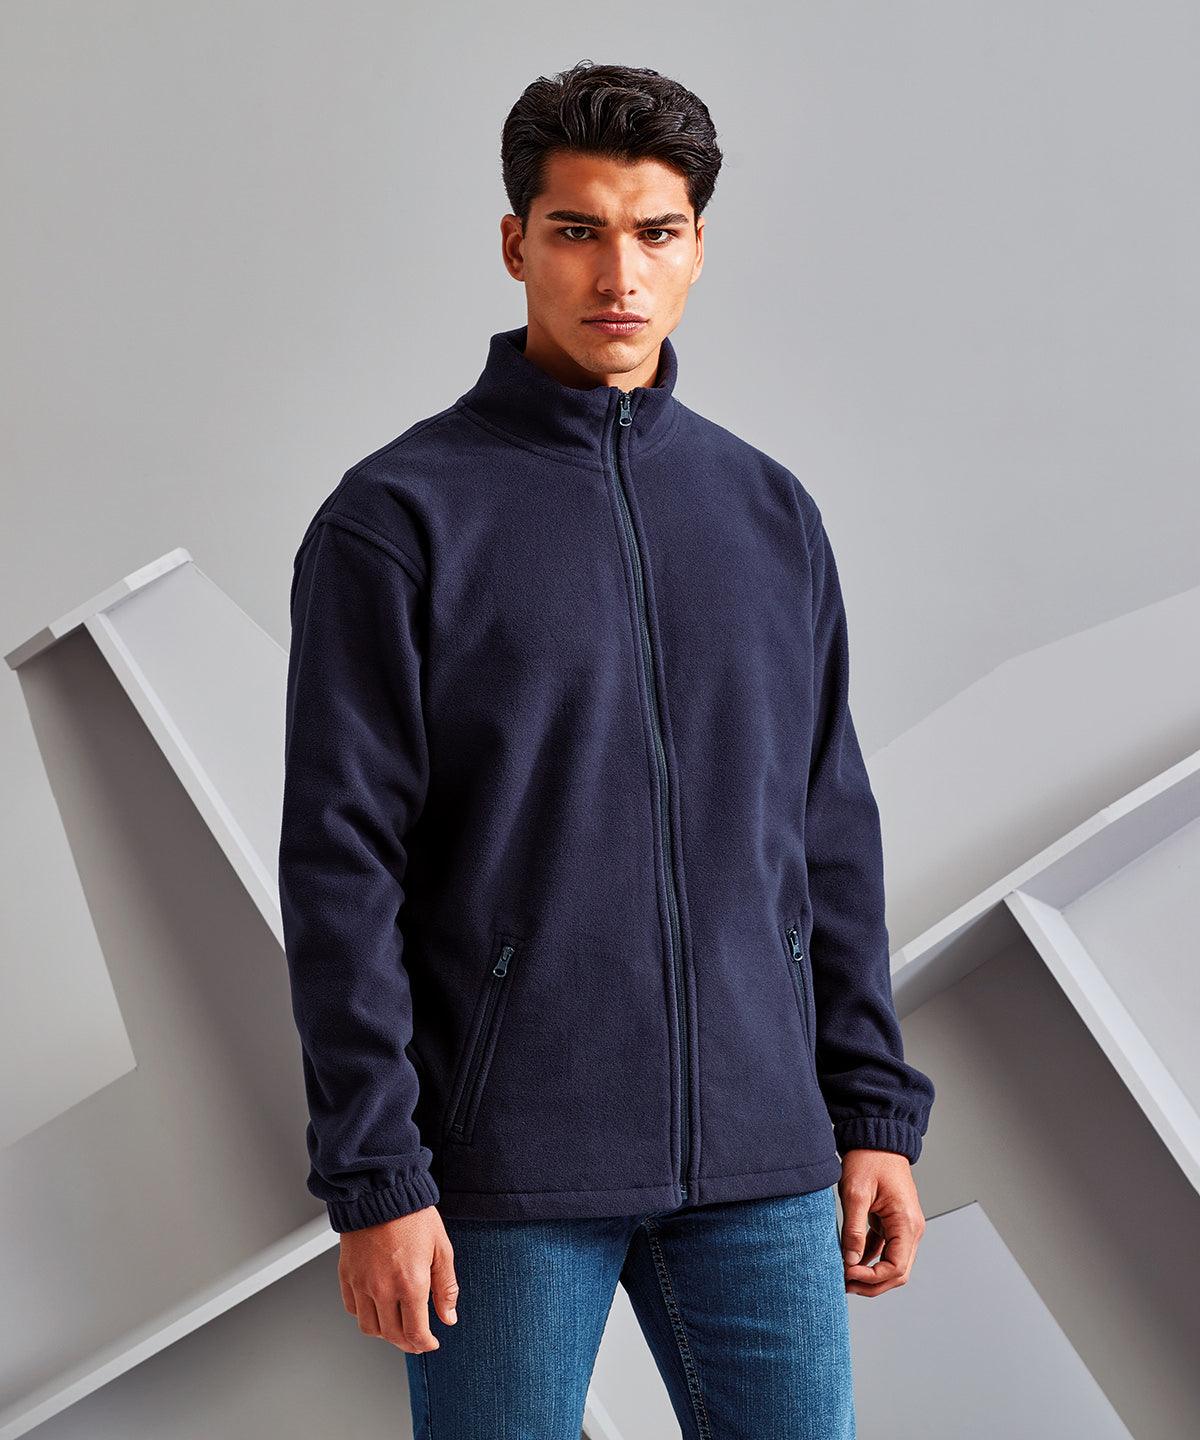 Charcoal - Full-zip fleece Jackets 2786 Jackets & Coats, Jackets - Fleece, Must Haves, Plus Sizes, Rebrandable, Workwear Schoolwear Centres